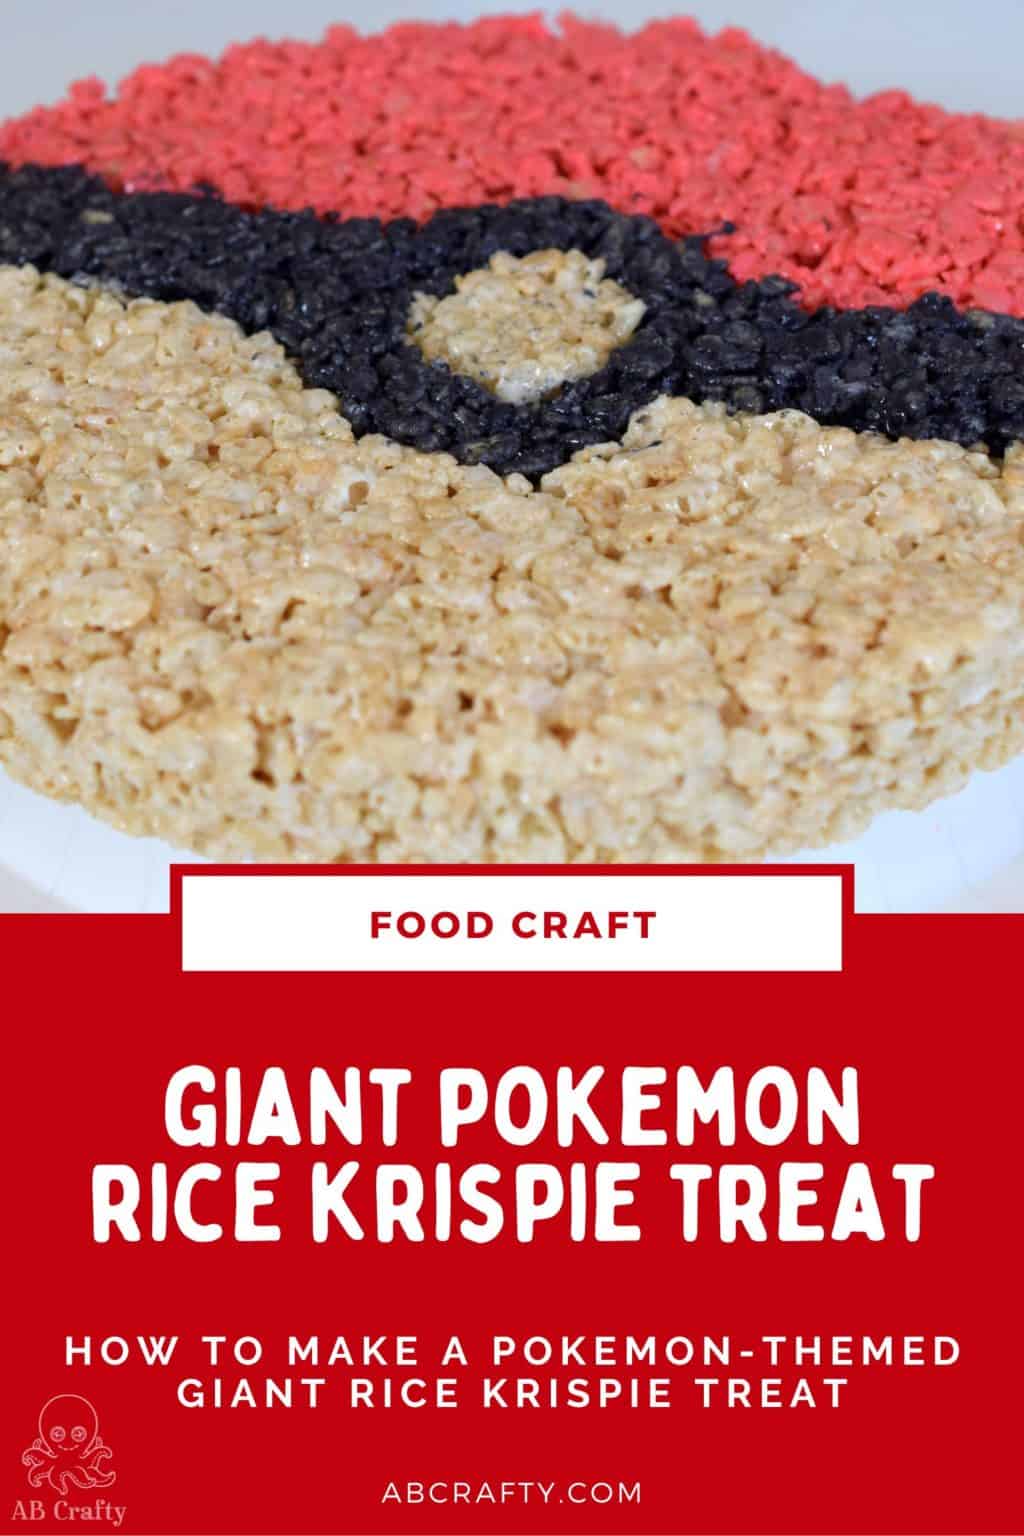 flat pokeball rice krispie treat with the title "food craft - giant pokemon rice krispie treat - how to make pokemon-themed giant rice krispie treat, abcrafty.com"